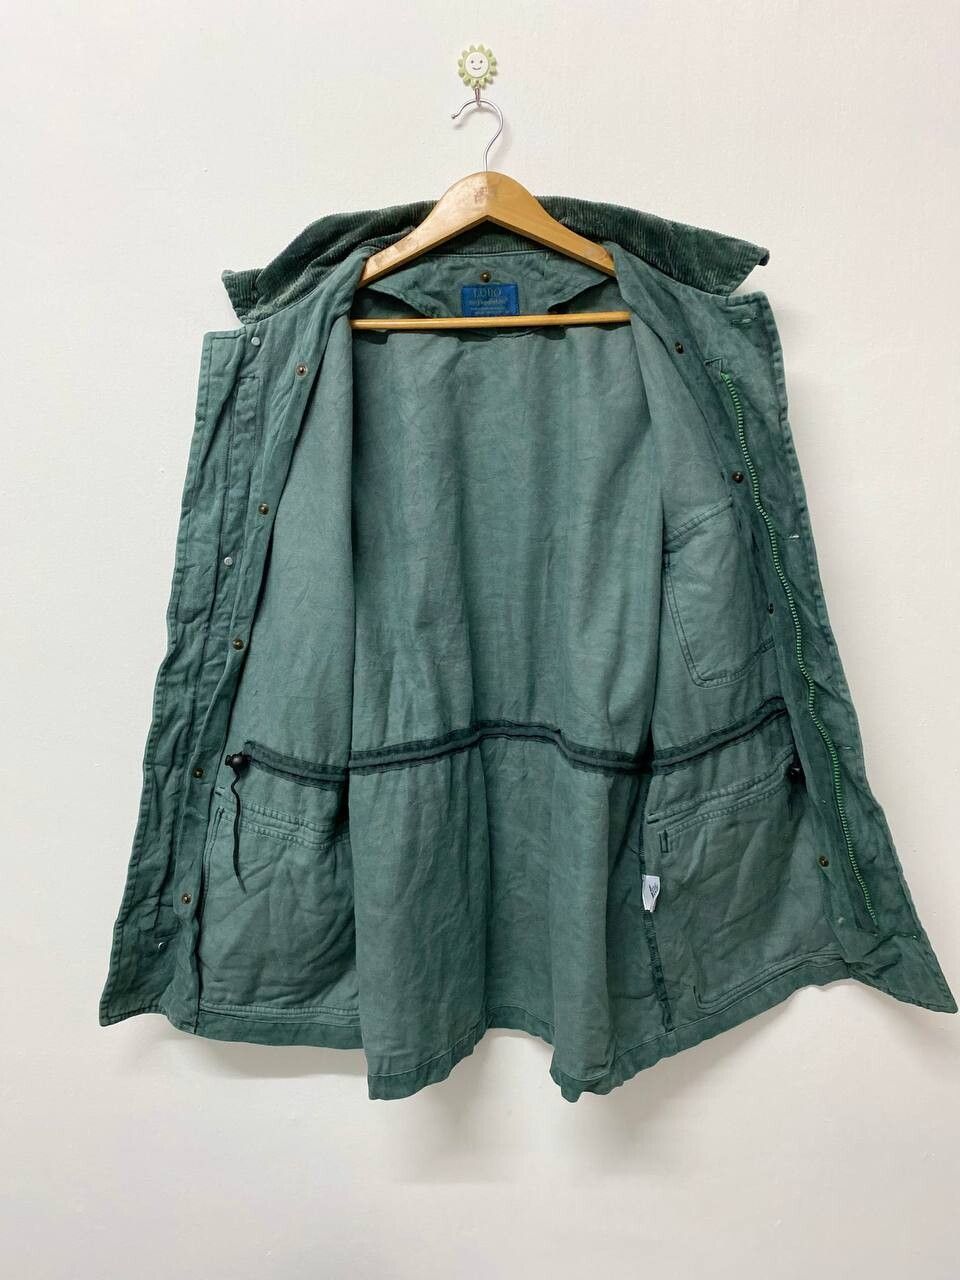 Vintage vintage lobo by pendleton khakis jacket nice design Size US M / EU 48-50 / 2 - 3 Thumbnail